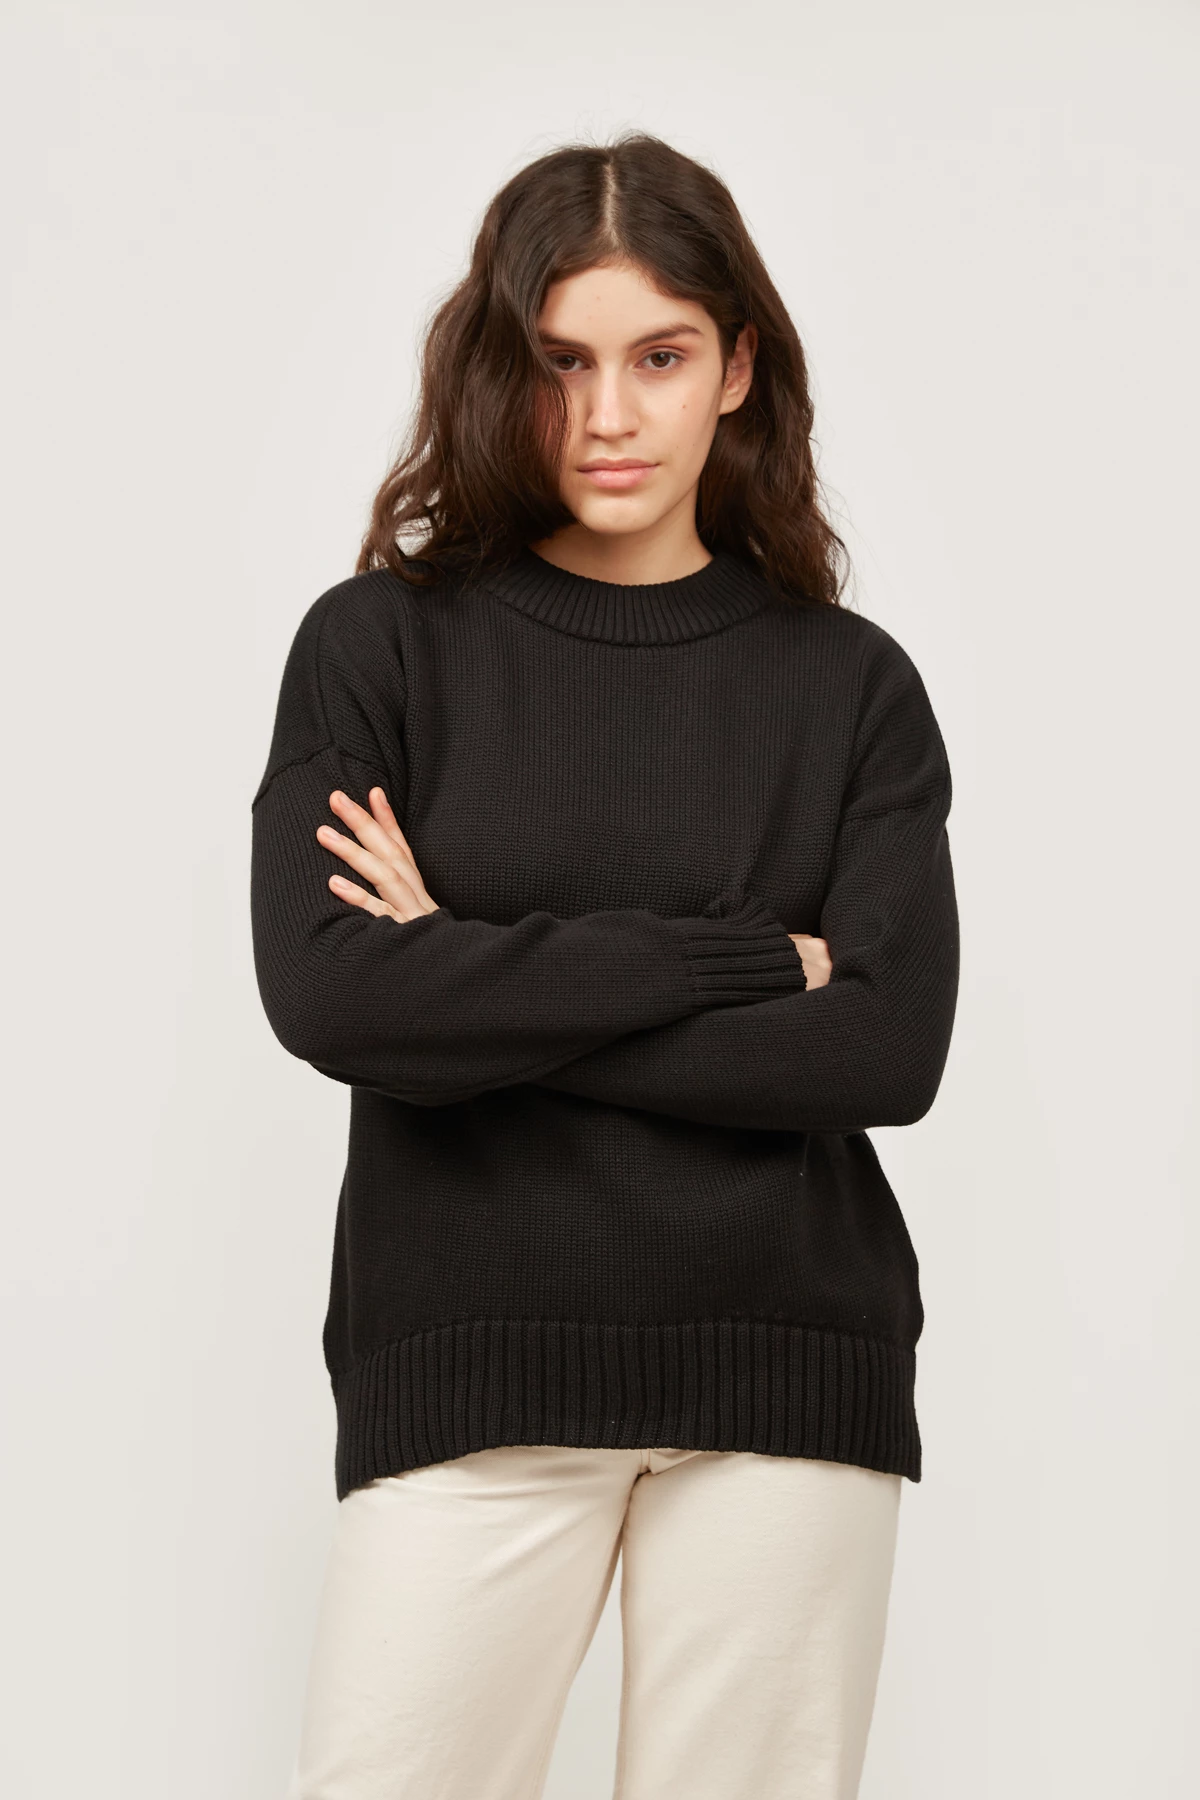 Black cotton sweater, photo 1